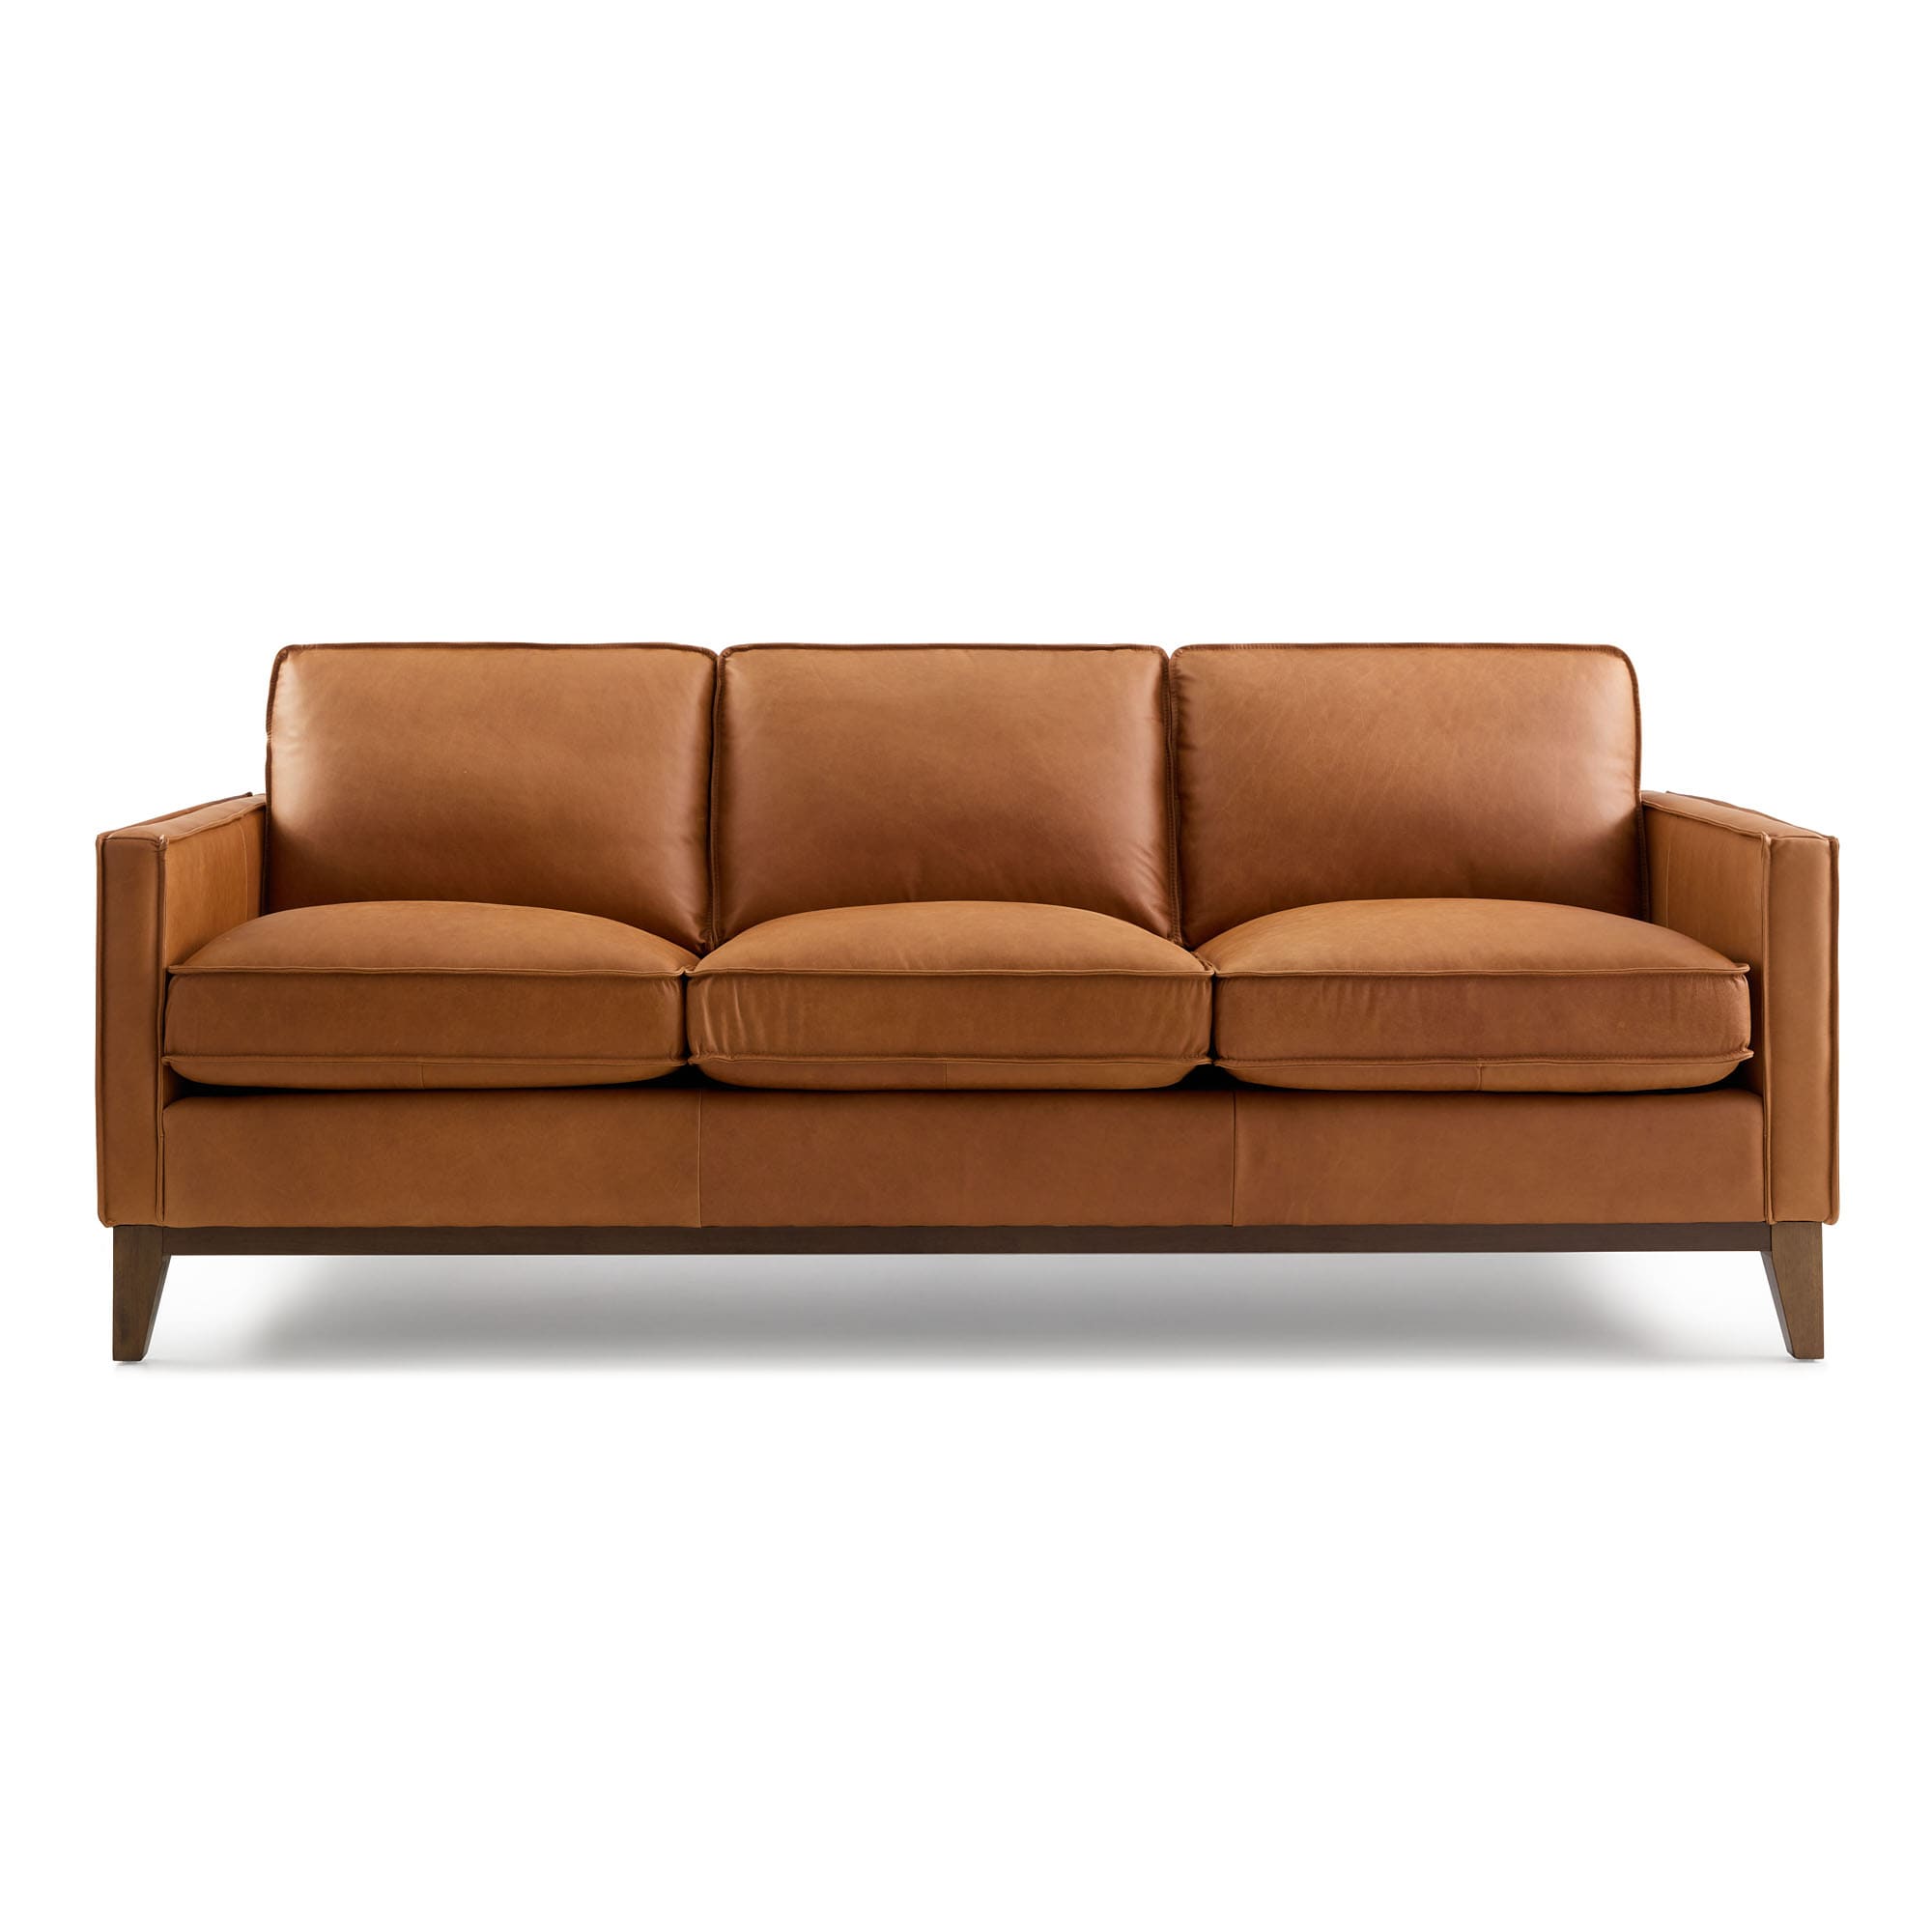 Chestnut Colored Leather Sofa | Baci Living Room